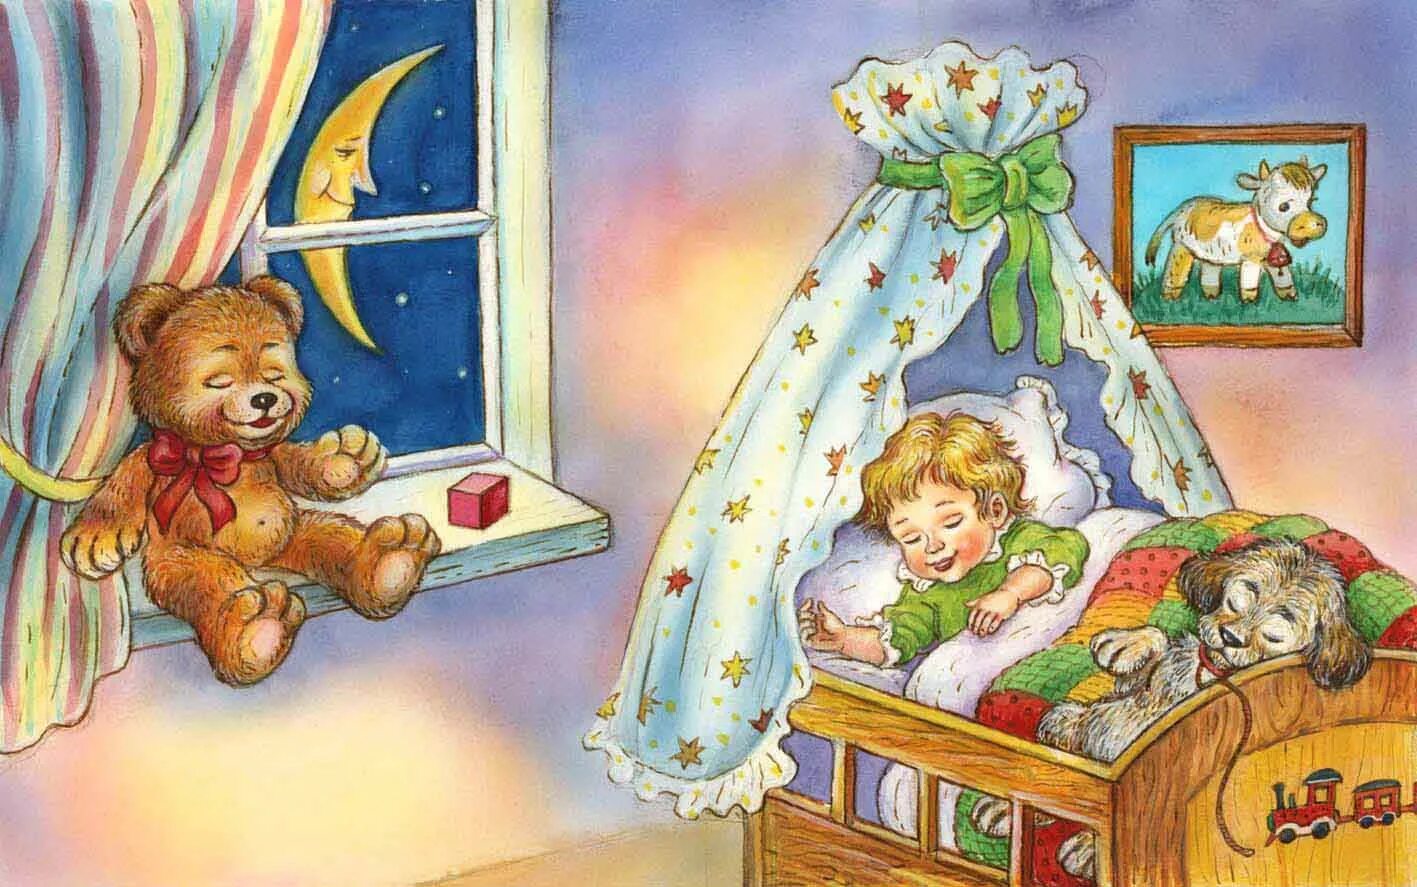 Иллюстрациик колыбелтным. Иллюстрация к колыбельной. Колыбель картинка для детей. Иллюстрации спящих детей. Небо засыпай баю бай